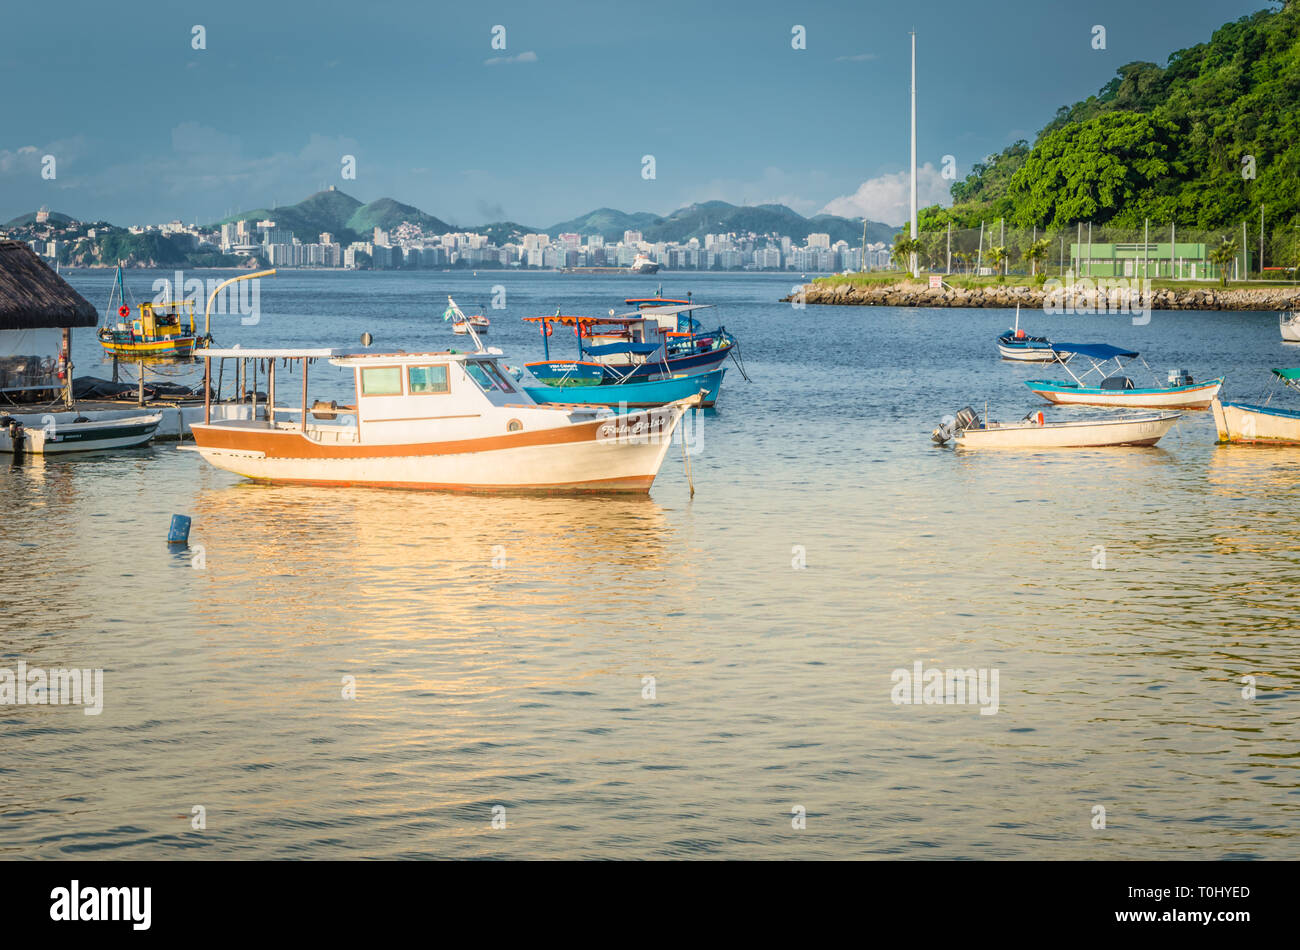 Rio de janeiro yacht club hi-res stock photography and images - Alamy